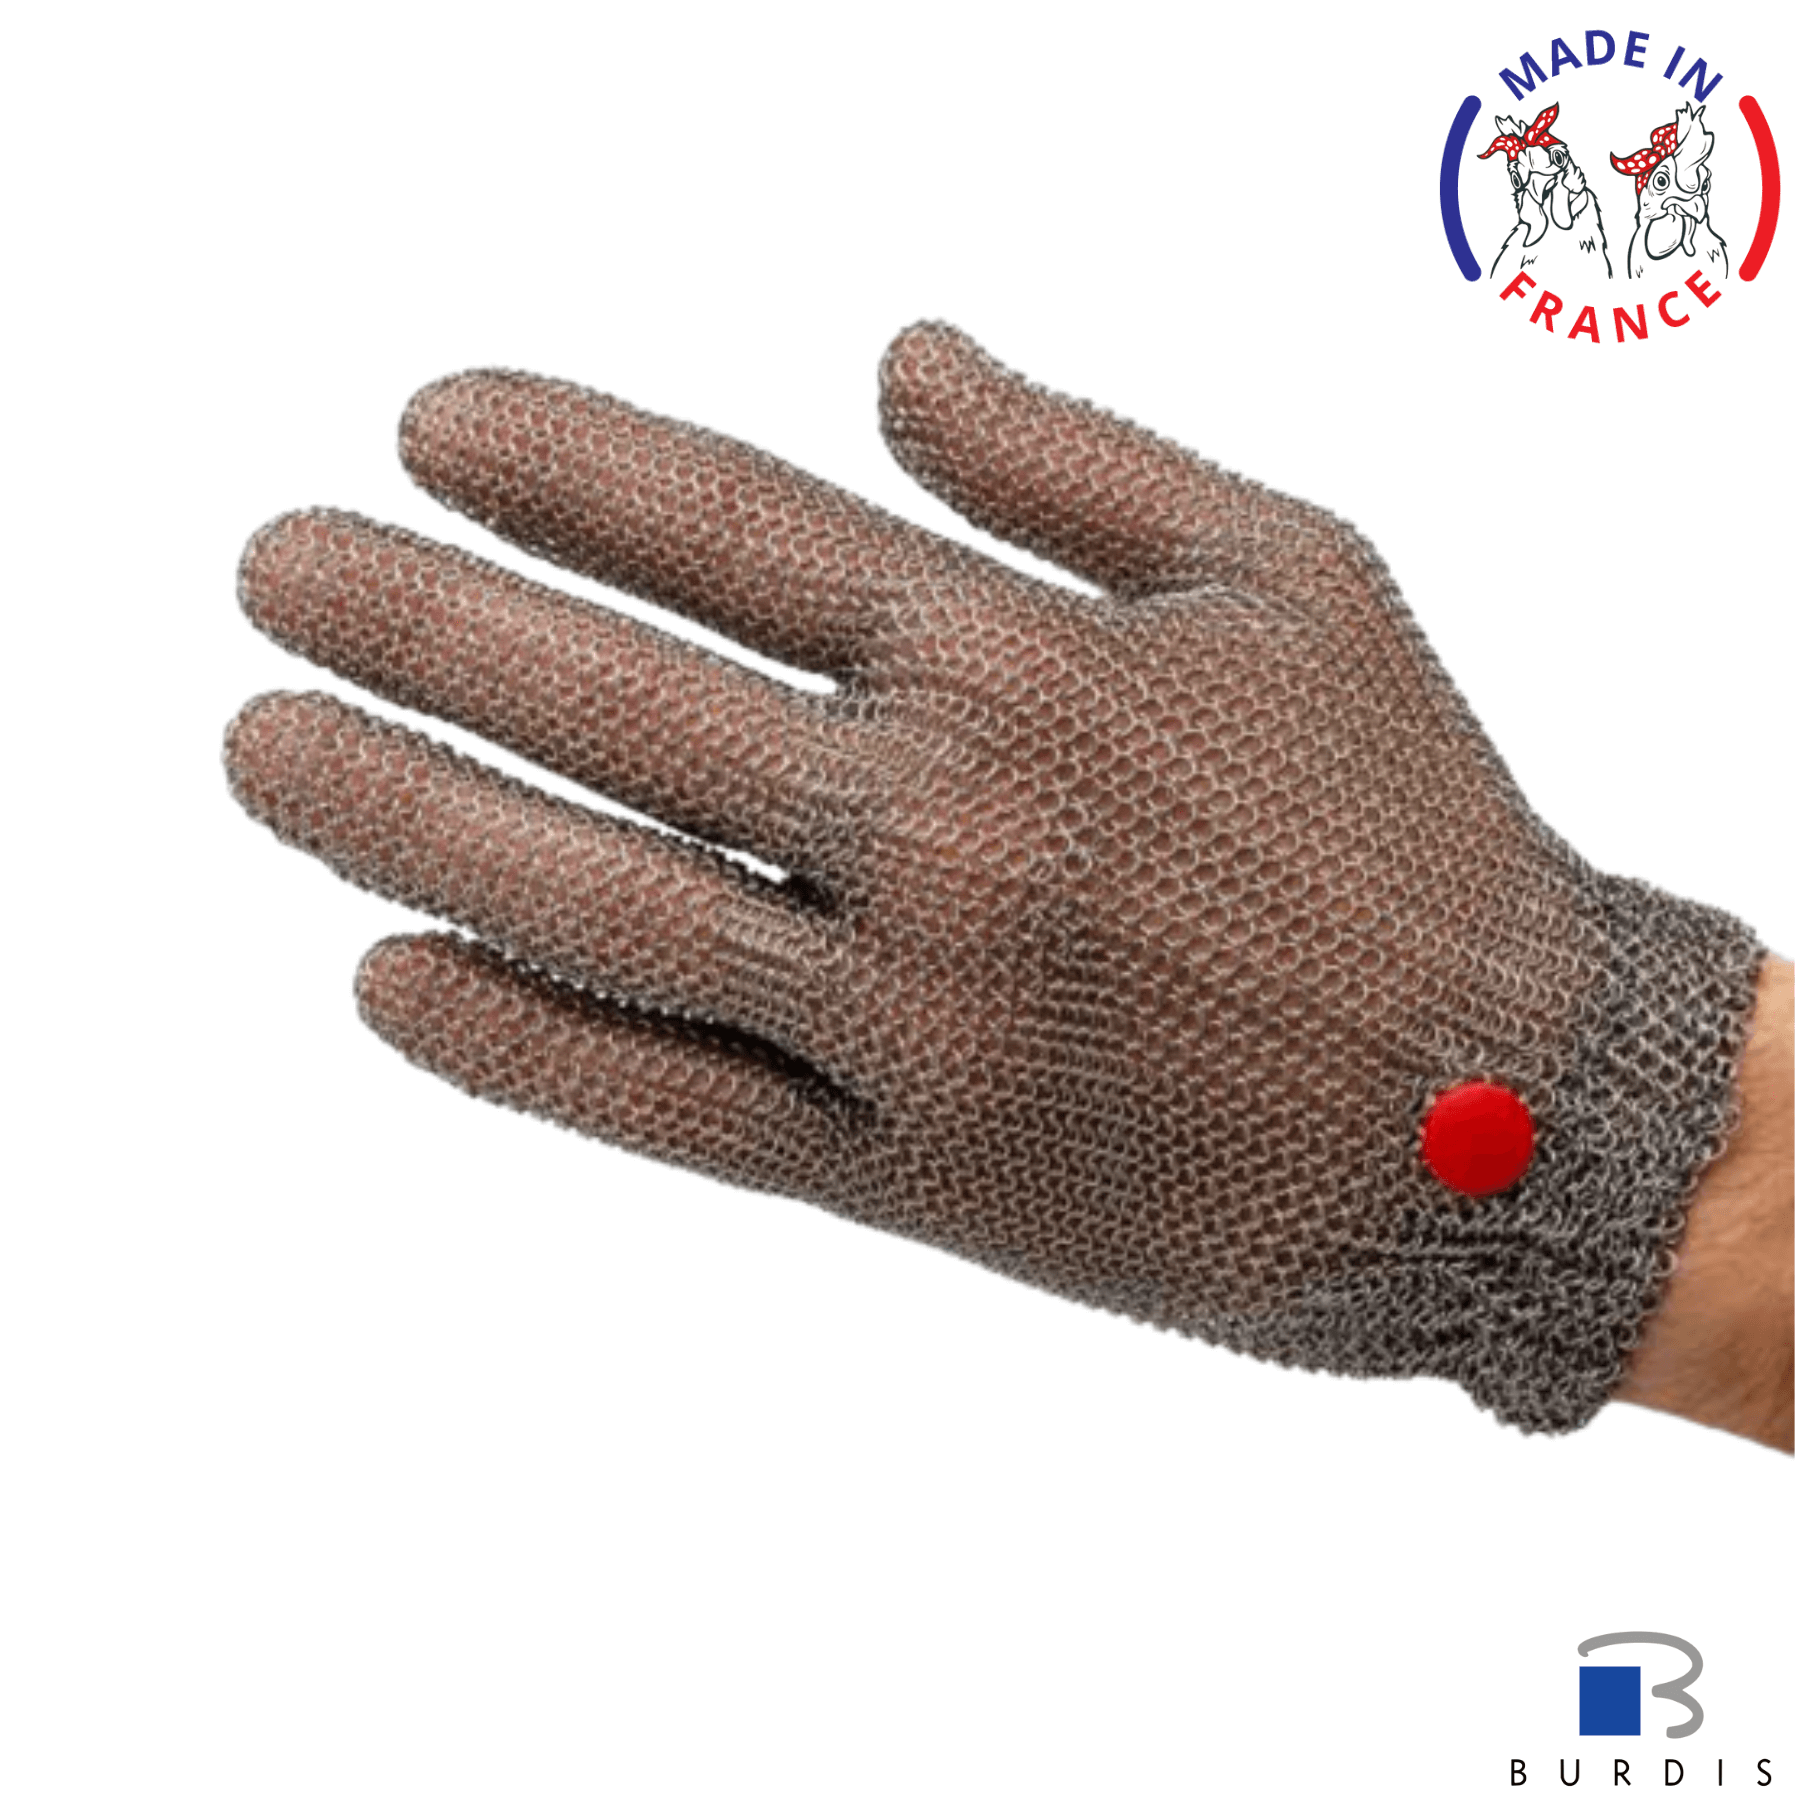 Stainless steel metal mesh glove - Burdis